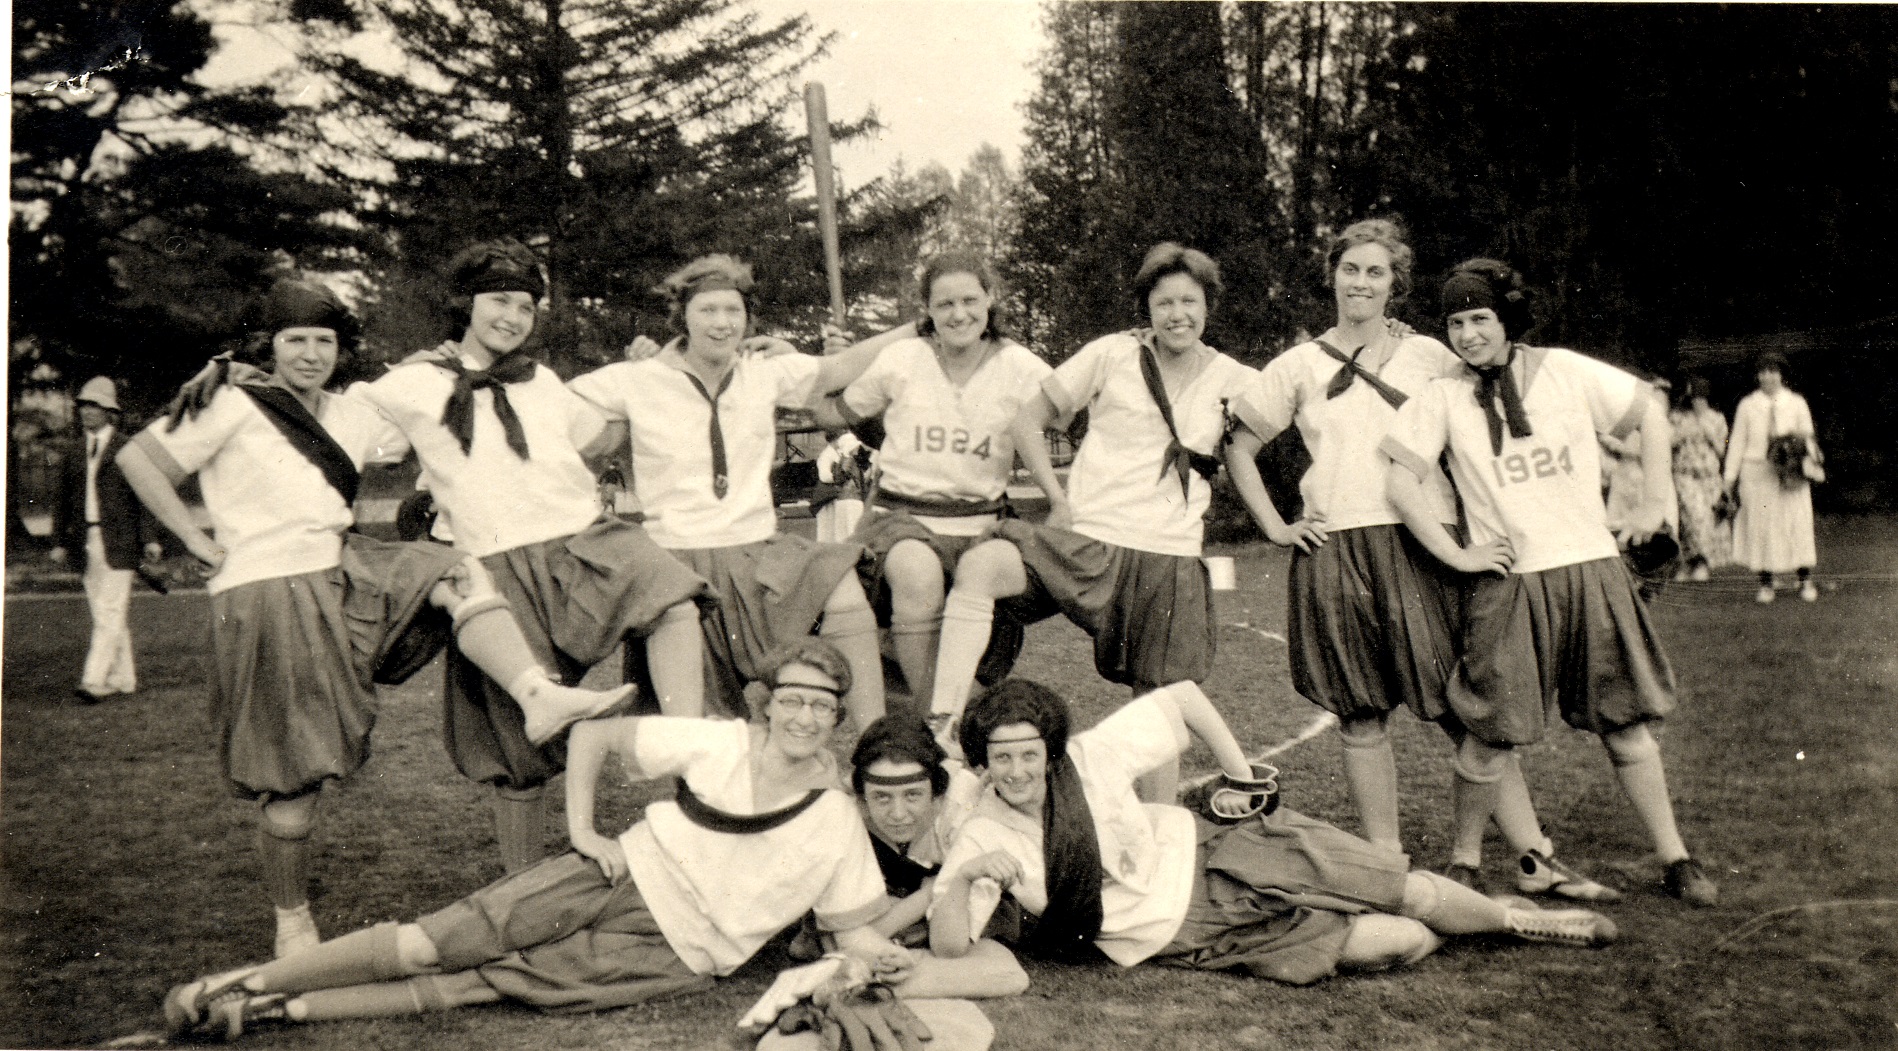 Baseball team, 1924